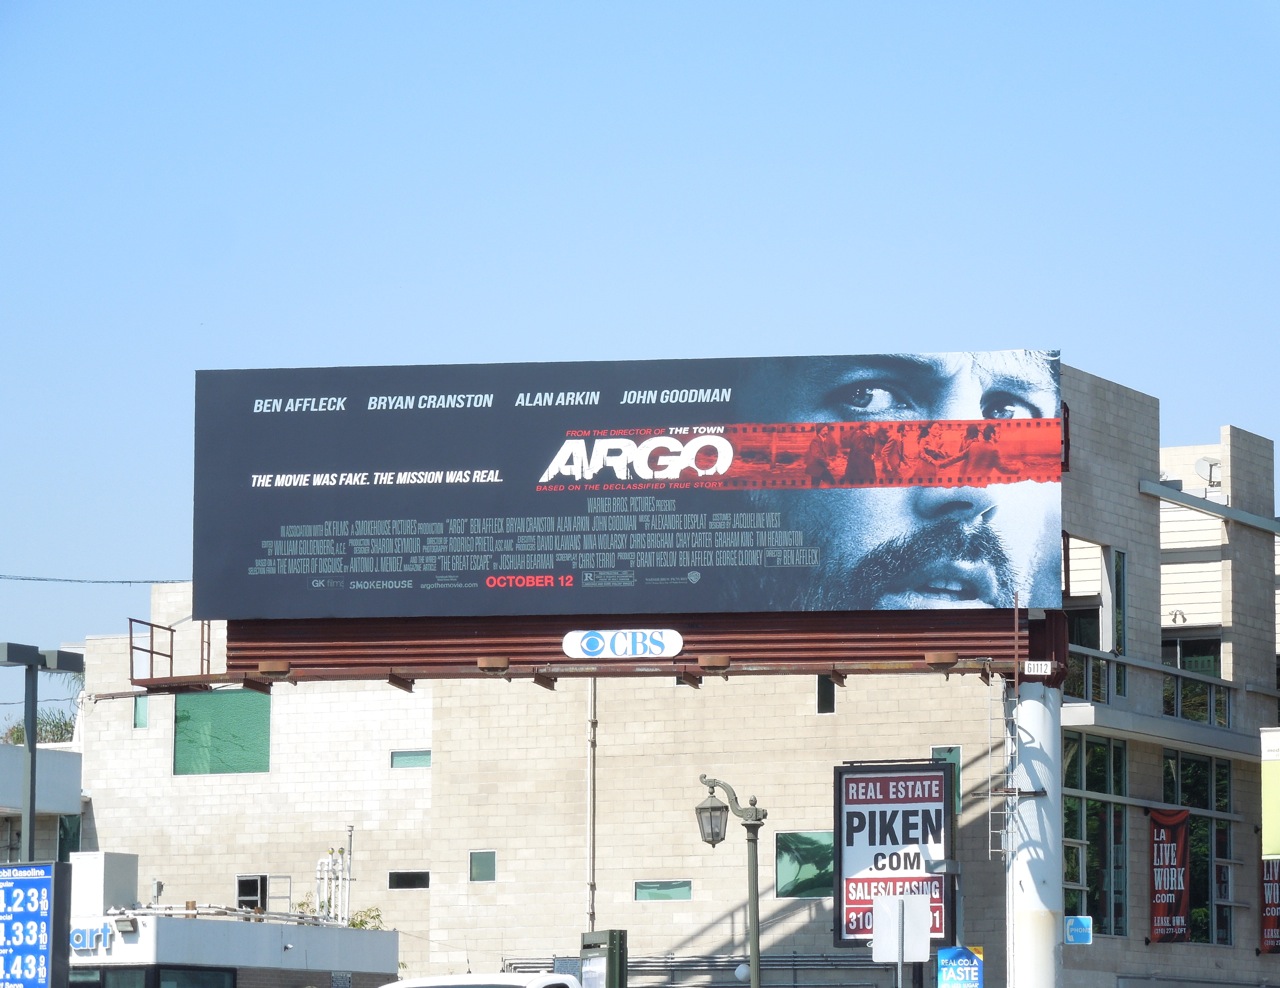 http://4.bp.blogspot.com/-Hs3LnPSqU7c/UGU_7UGp4mI/AAAAAAAA1WY/W6ovGmtY-fo/s1600/Argo+movie+billboard.jpg